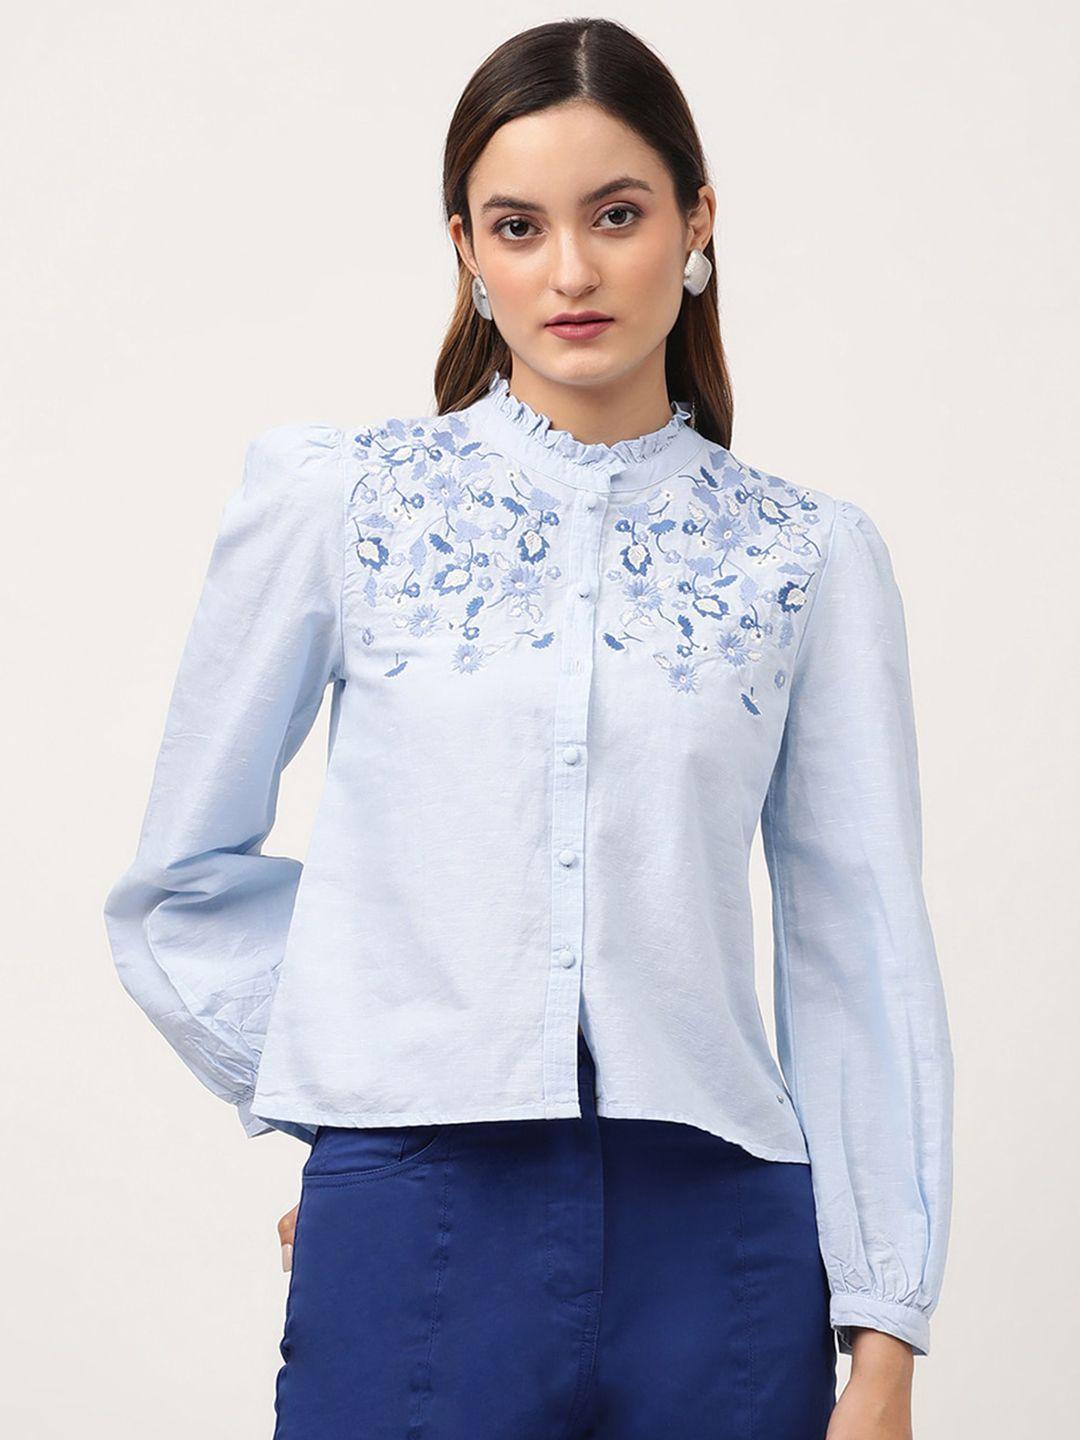 elle blue floral mandarin collar shirt style cotton top